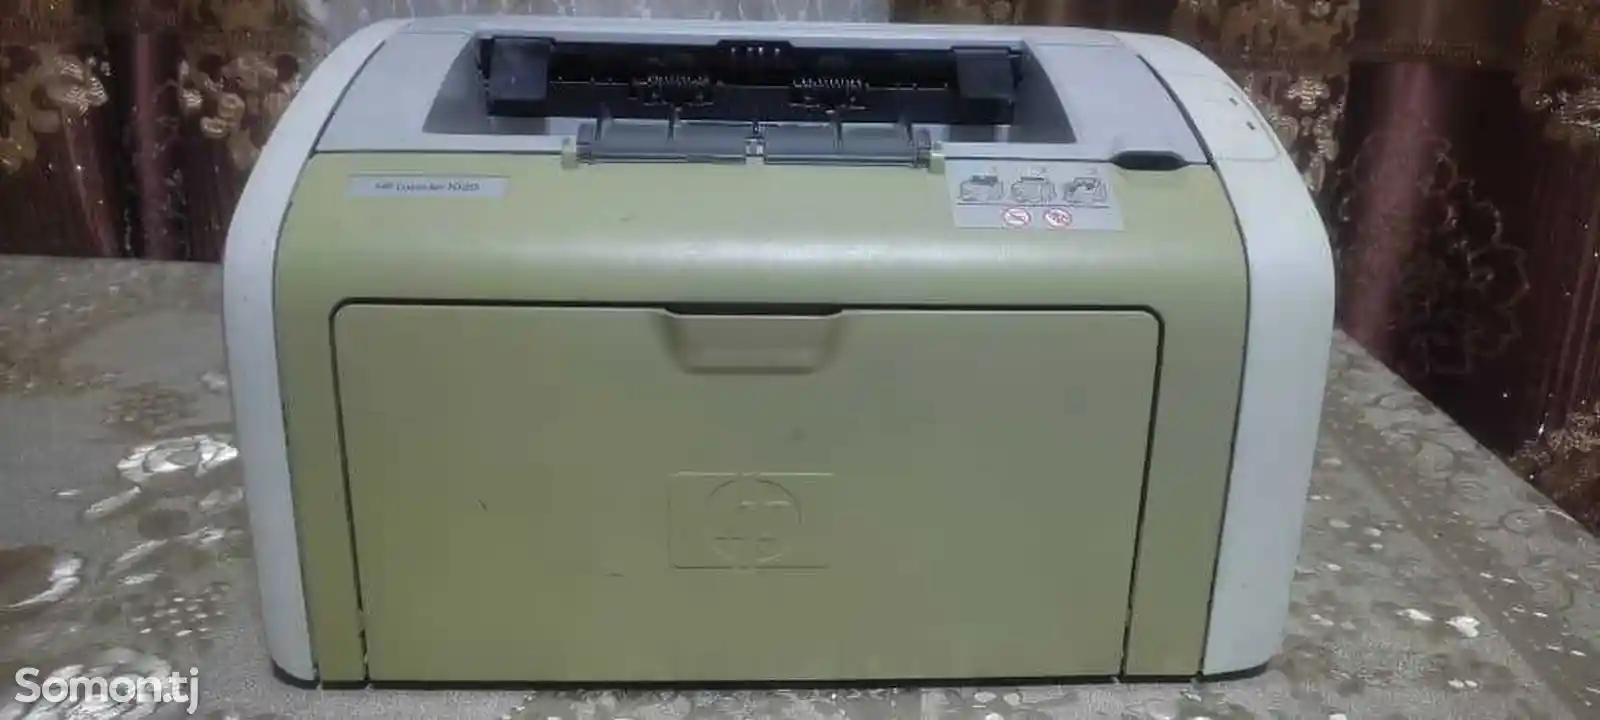 Принтер hp 1020-2